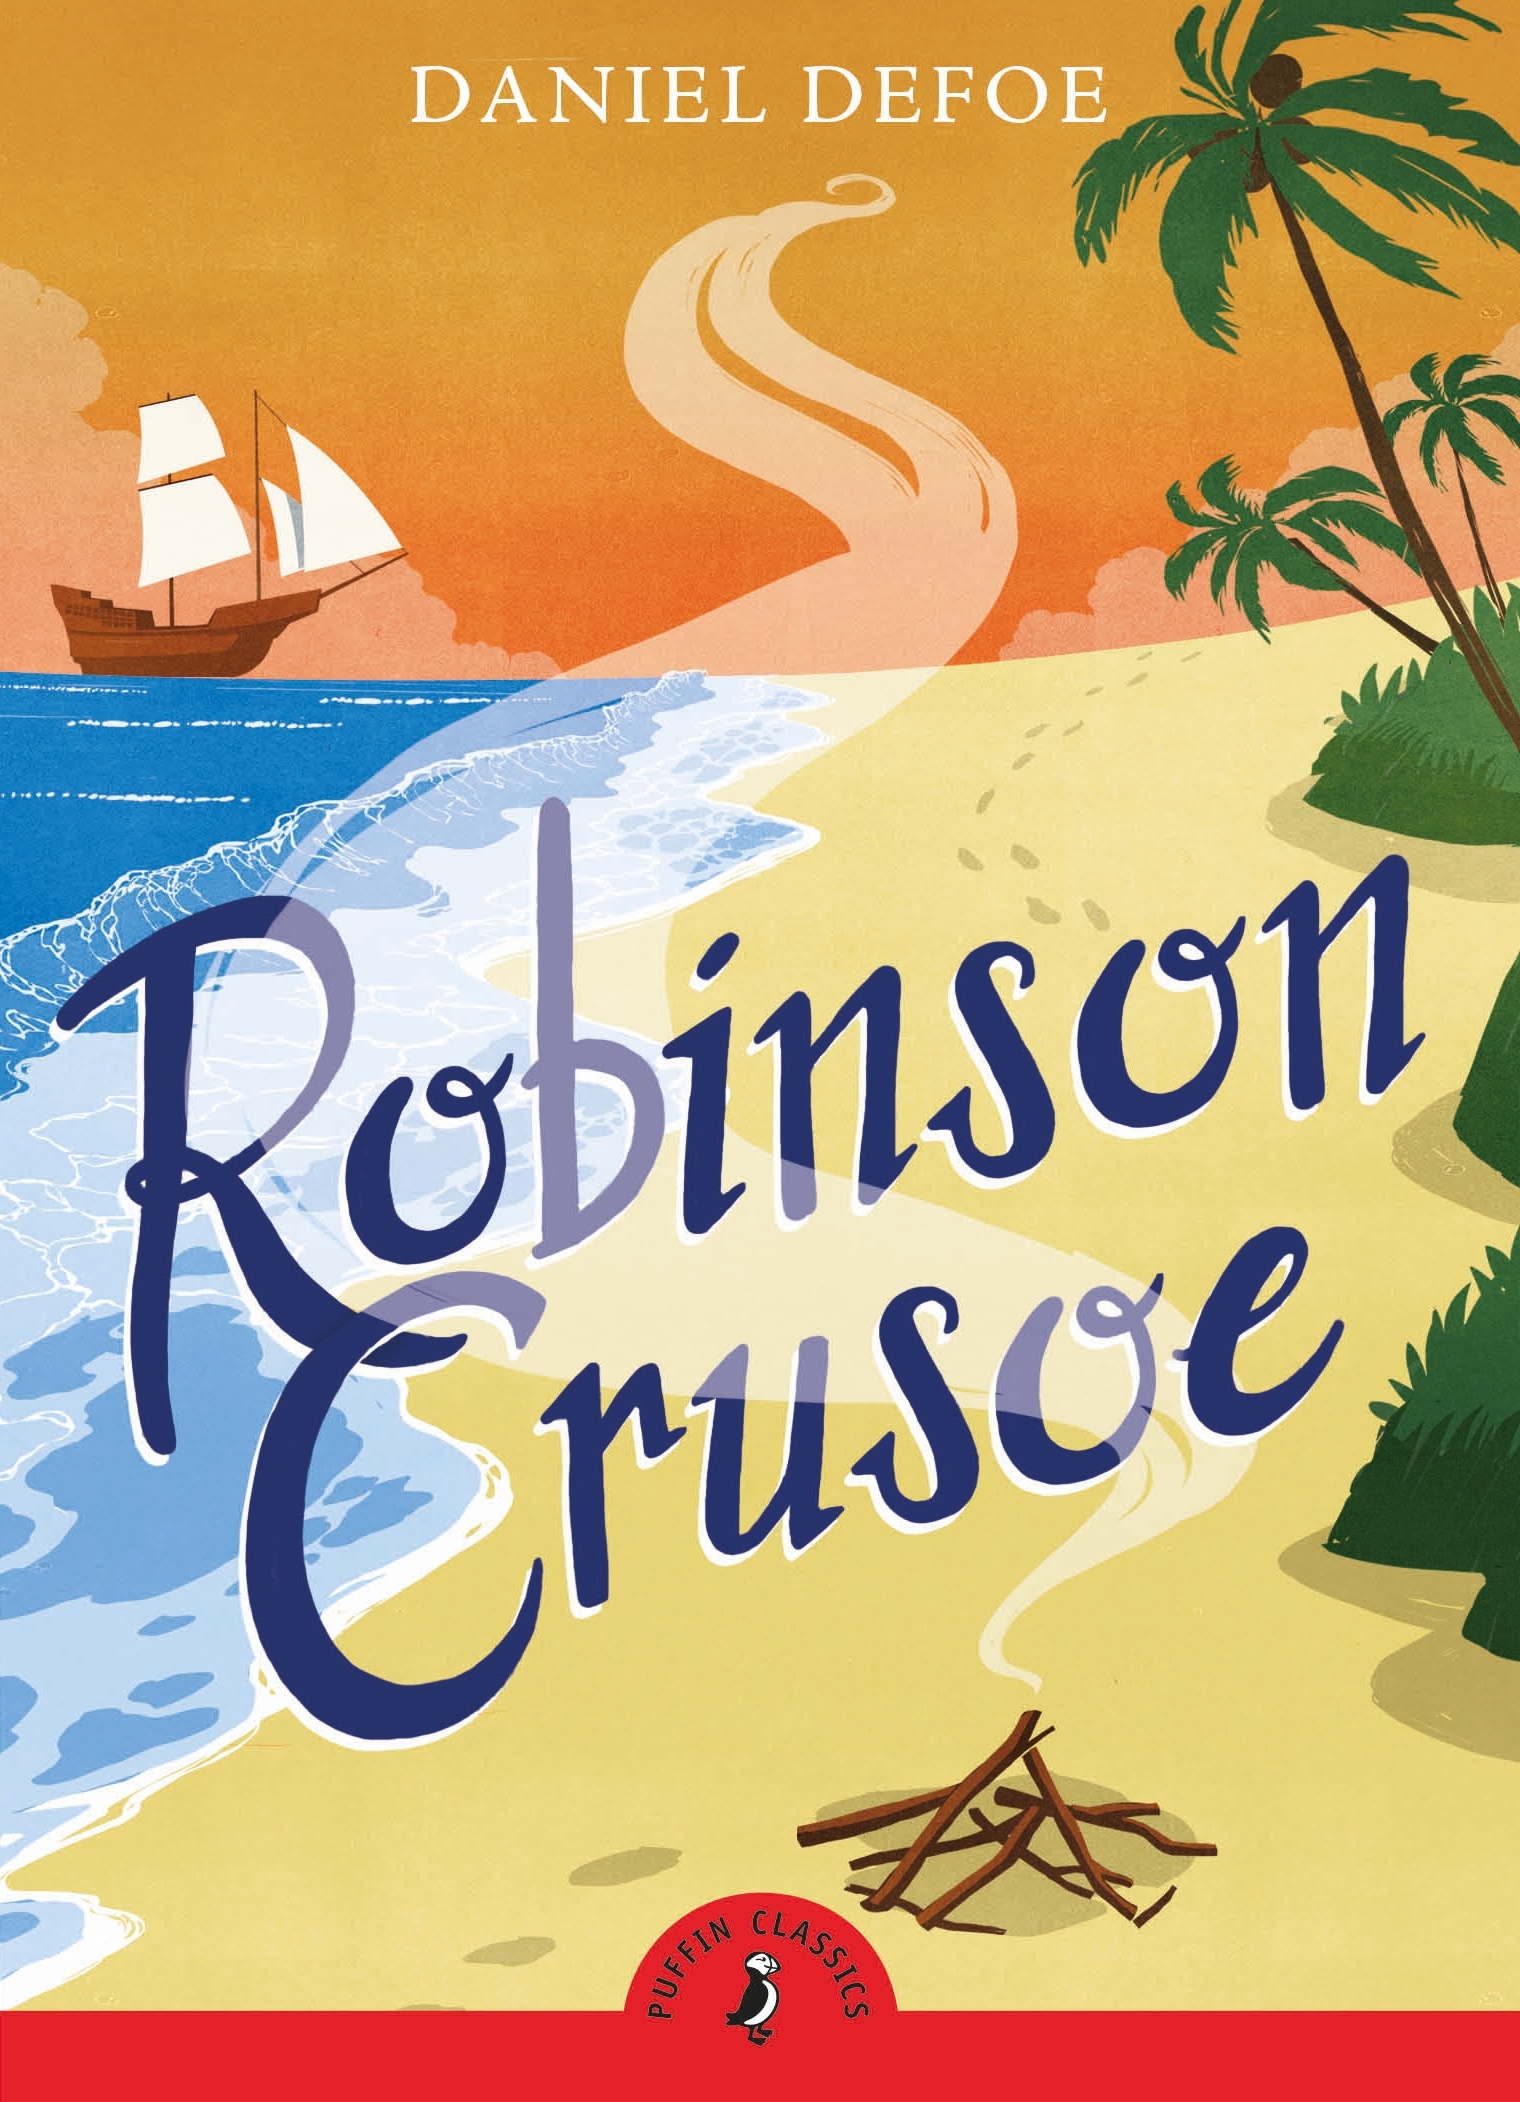 book review robinson crusoe